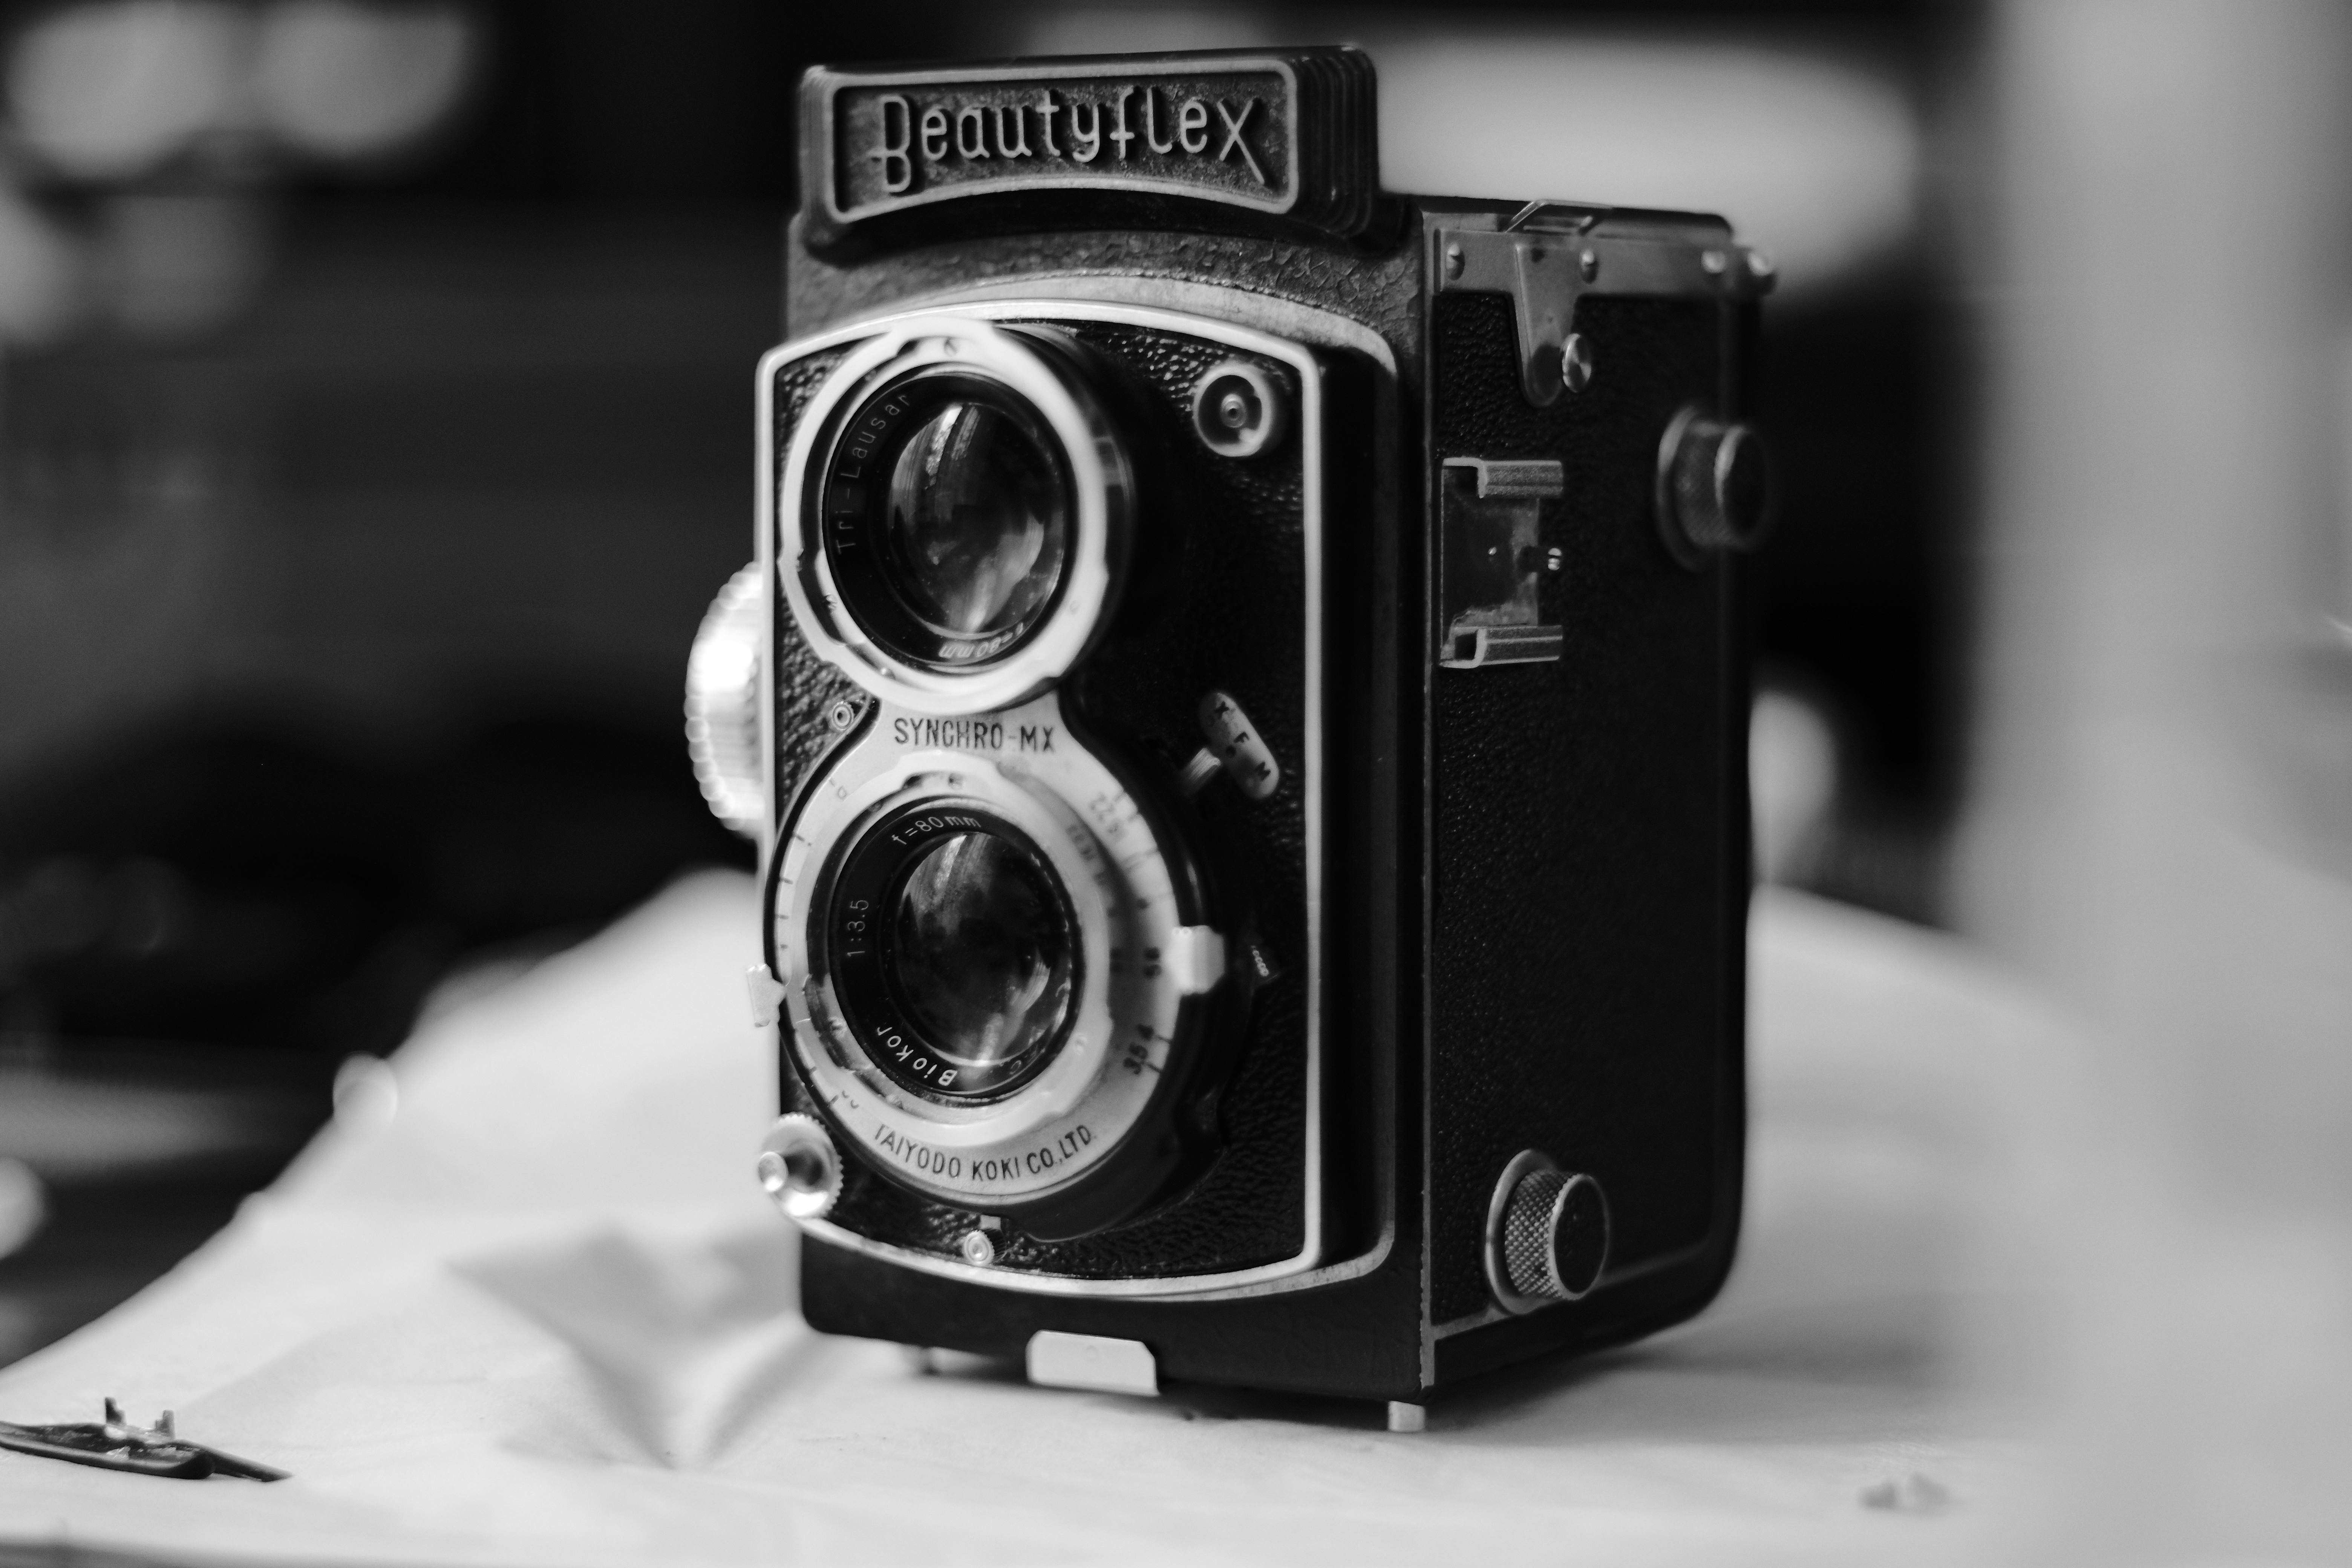 General 6240x4160 camera photography vintage Japan Beautyflex Taiyodo Koki lens depth of field monochrome